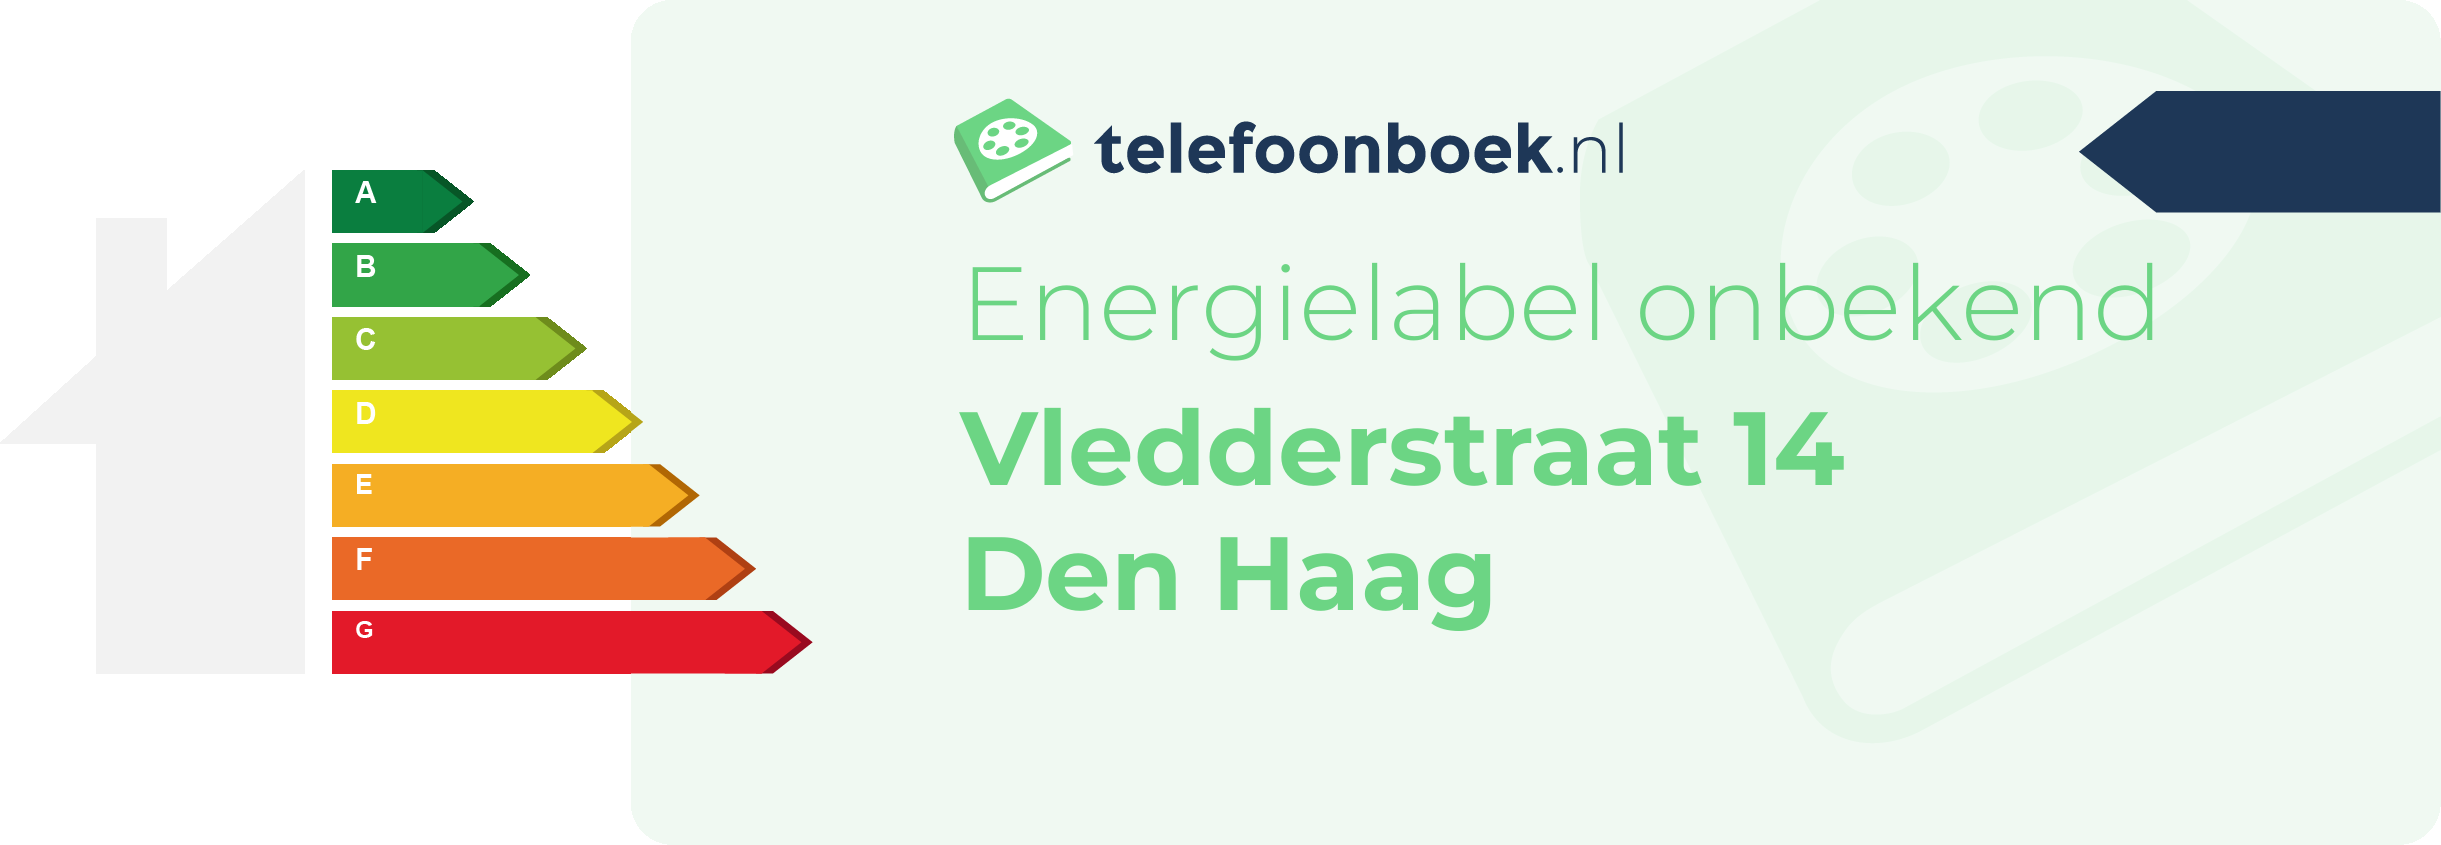 Energielabel Vledderstraat 14 Den Haag